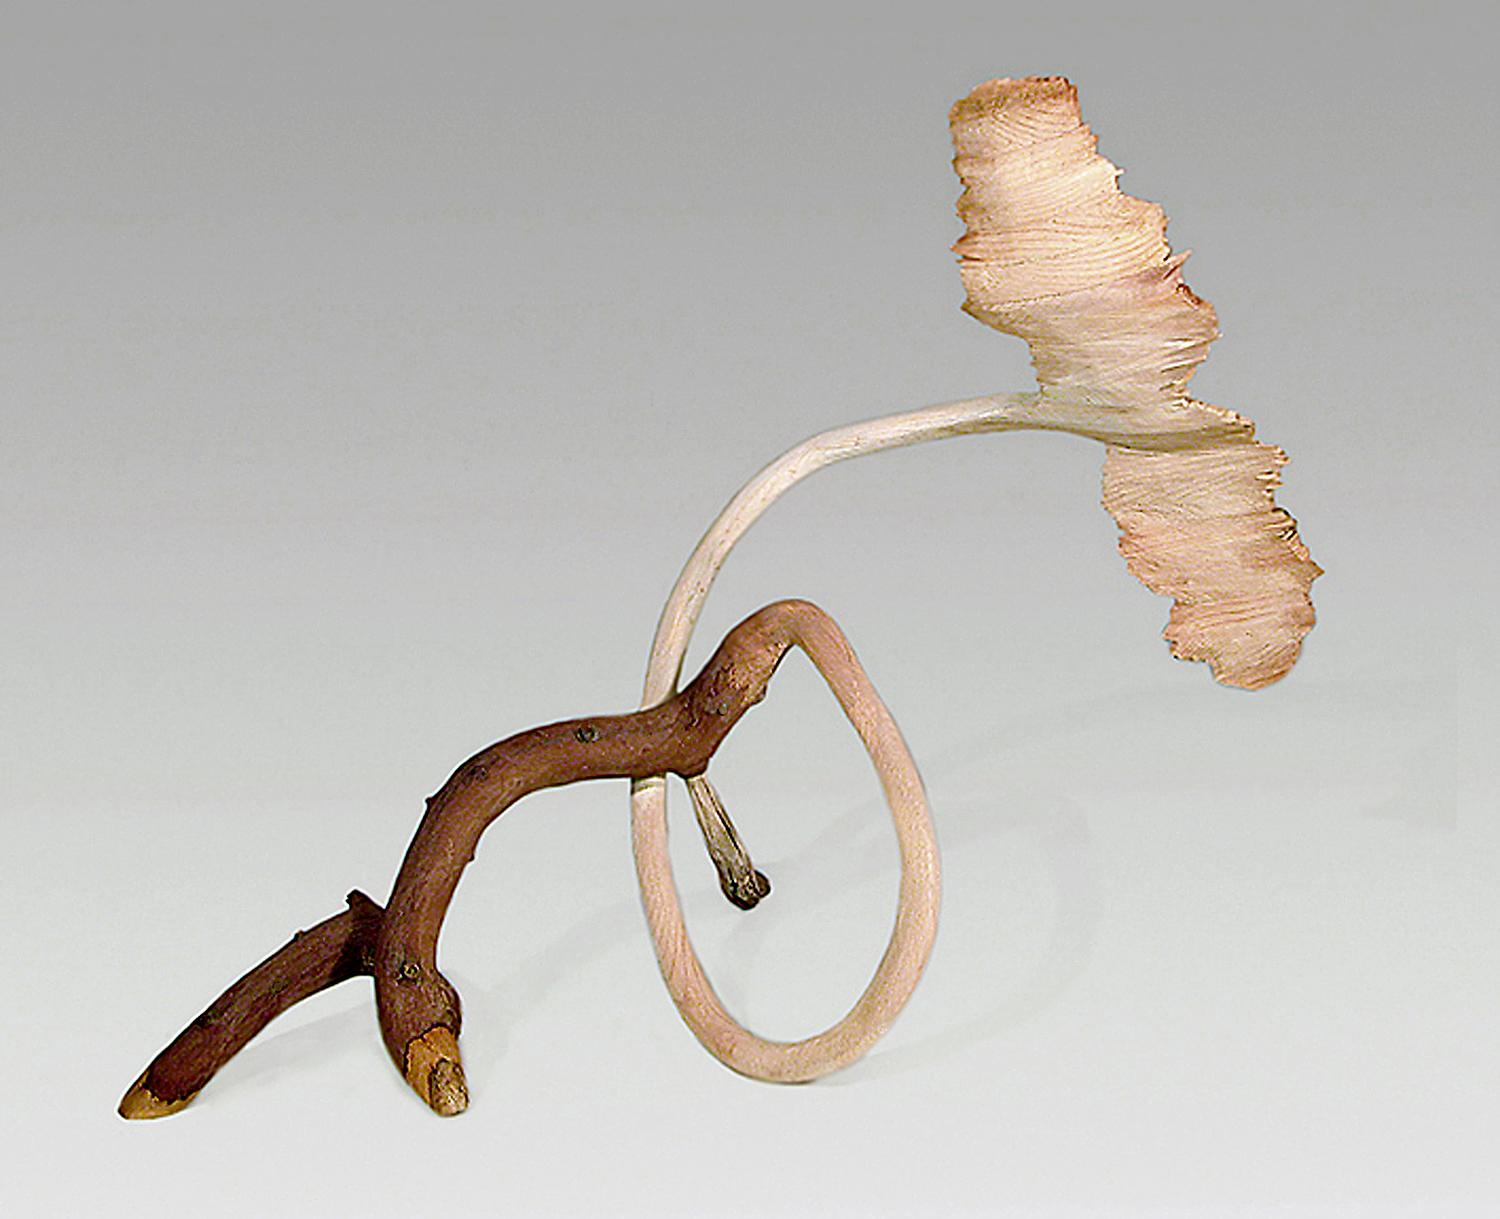 Abstract Sculpture Jeff Key - Sculpture abstraite en bois